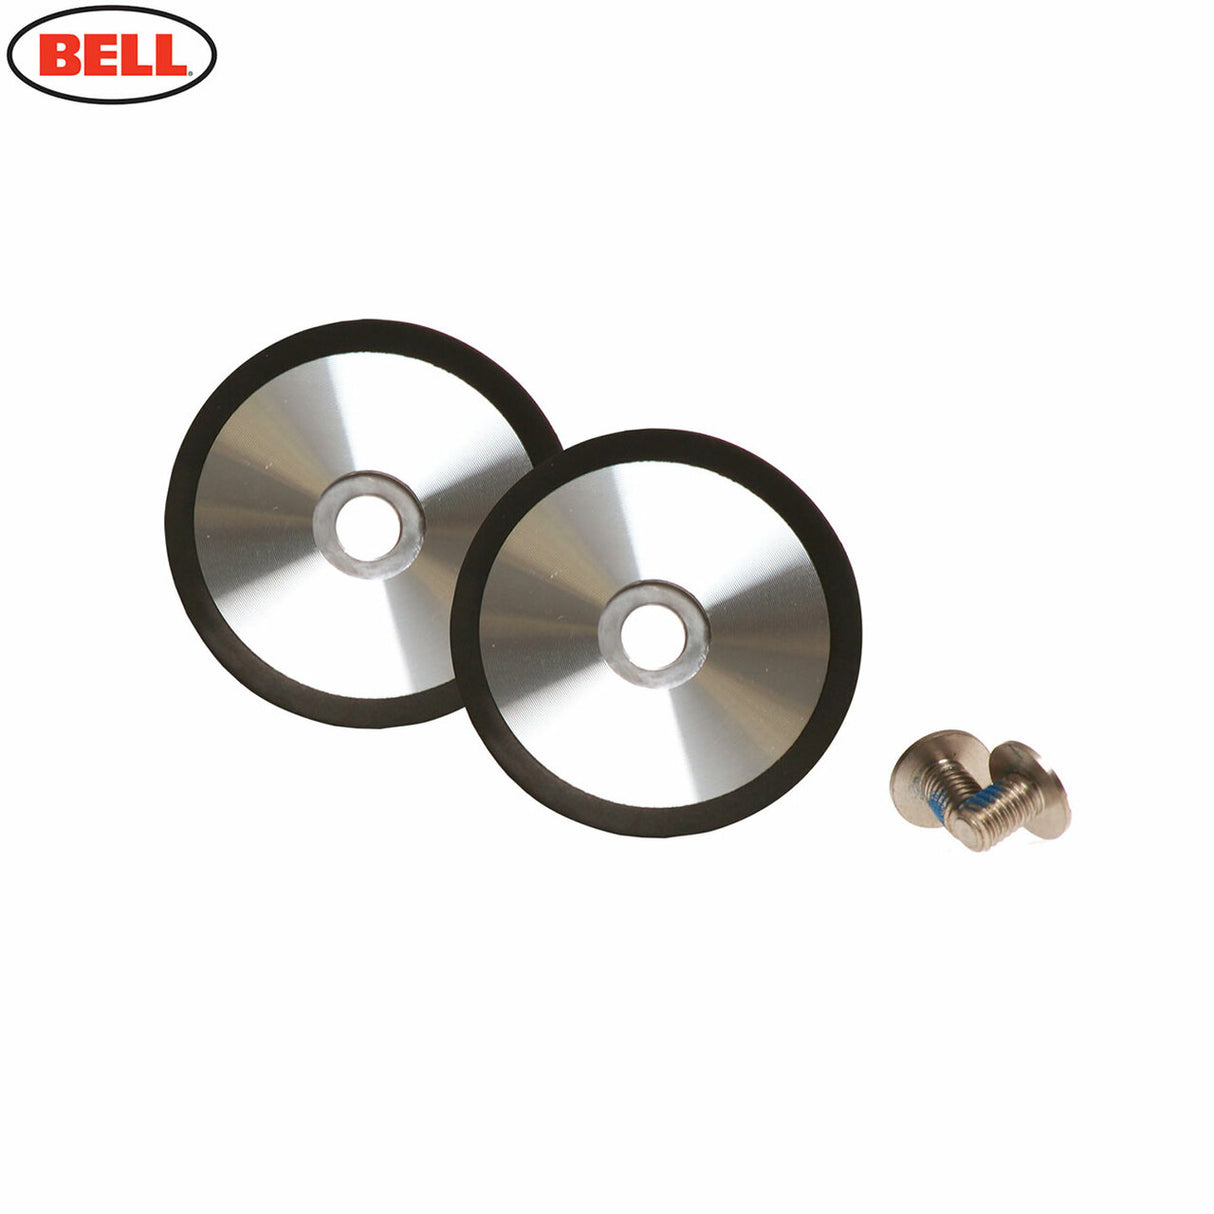 Bell Replacement Bullitt Shield Pods Brush - Silver